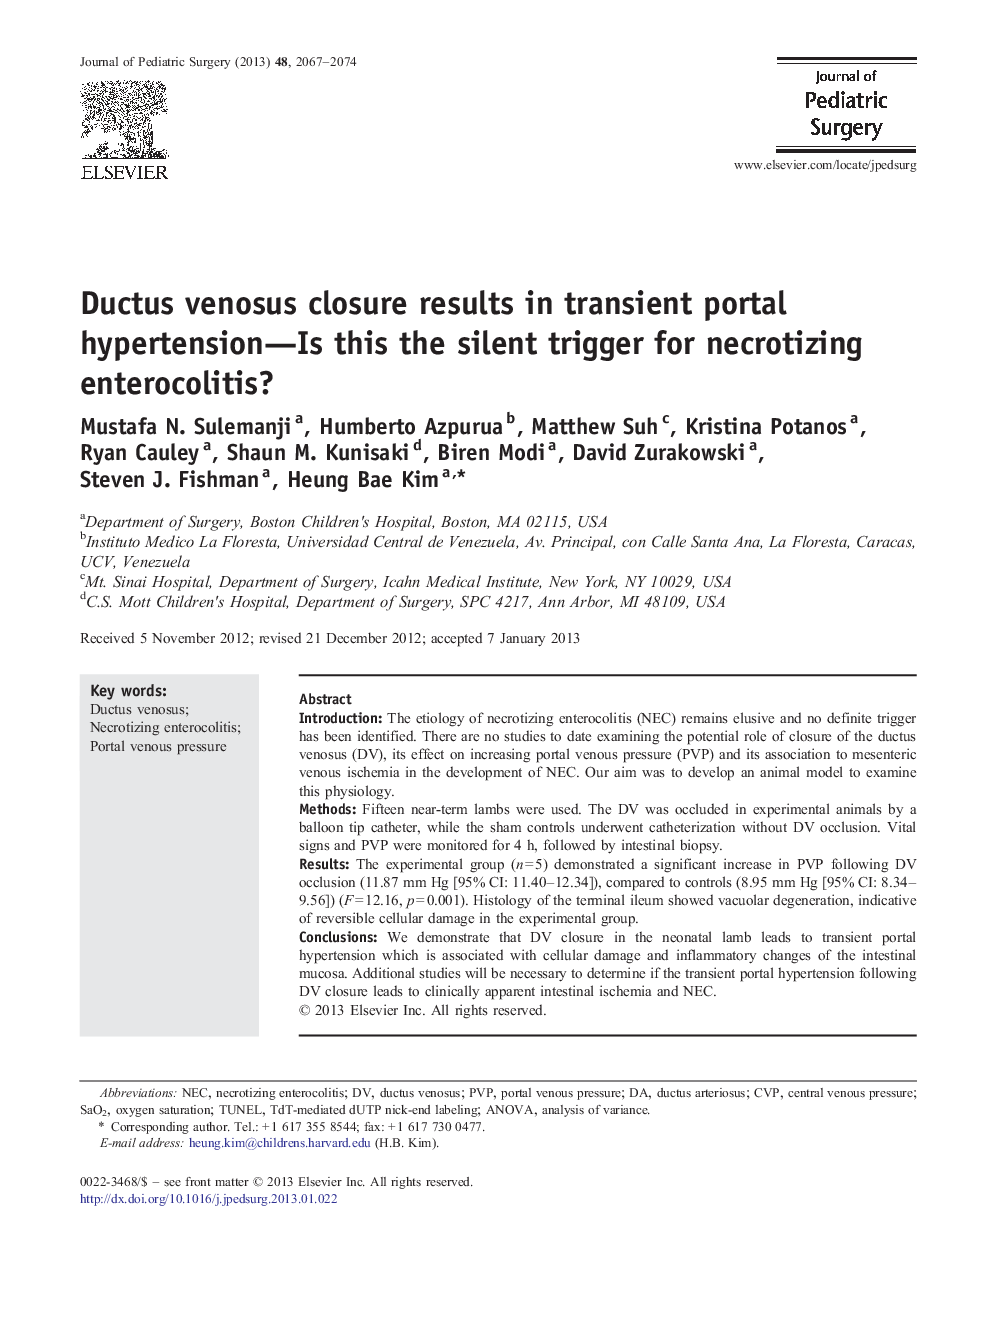 Original ArticleDuctus venosus closure results in transient portal hypertension-Is this the silent trigger for necrotizing enterocolitis?